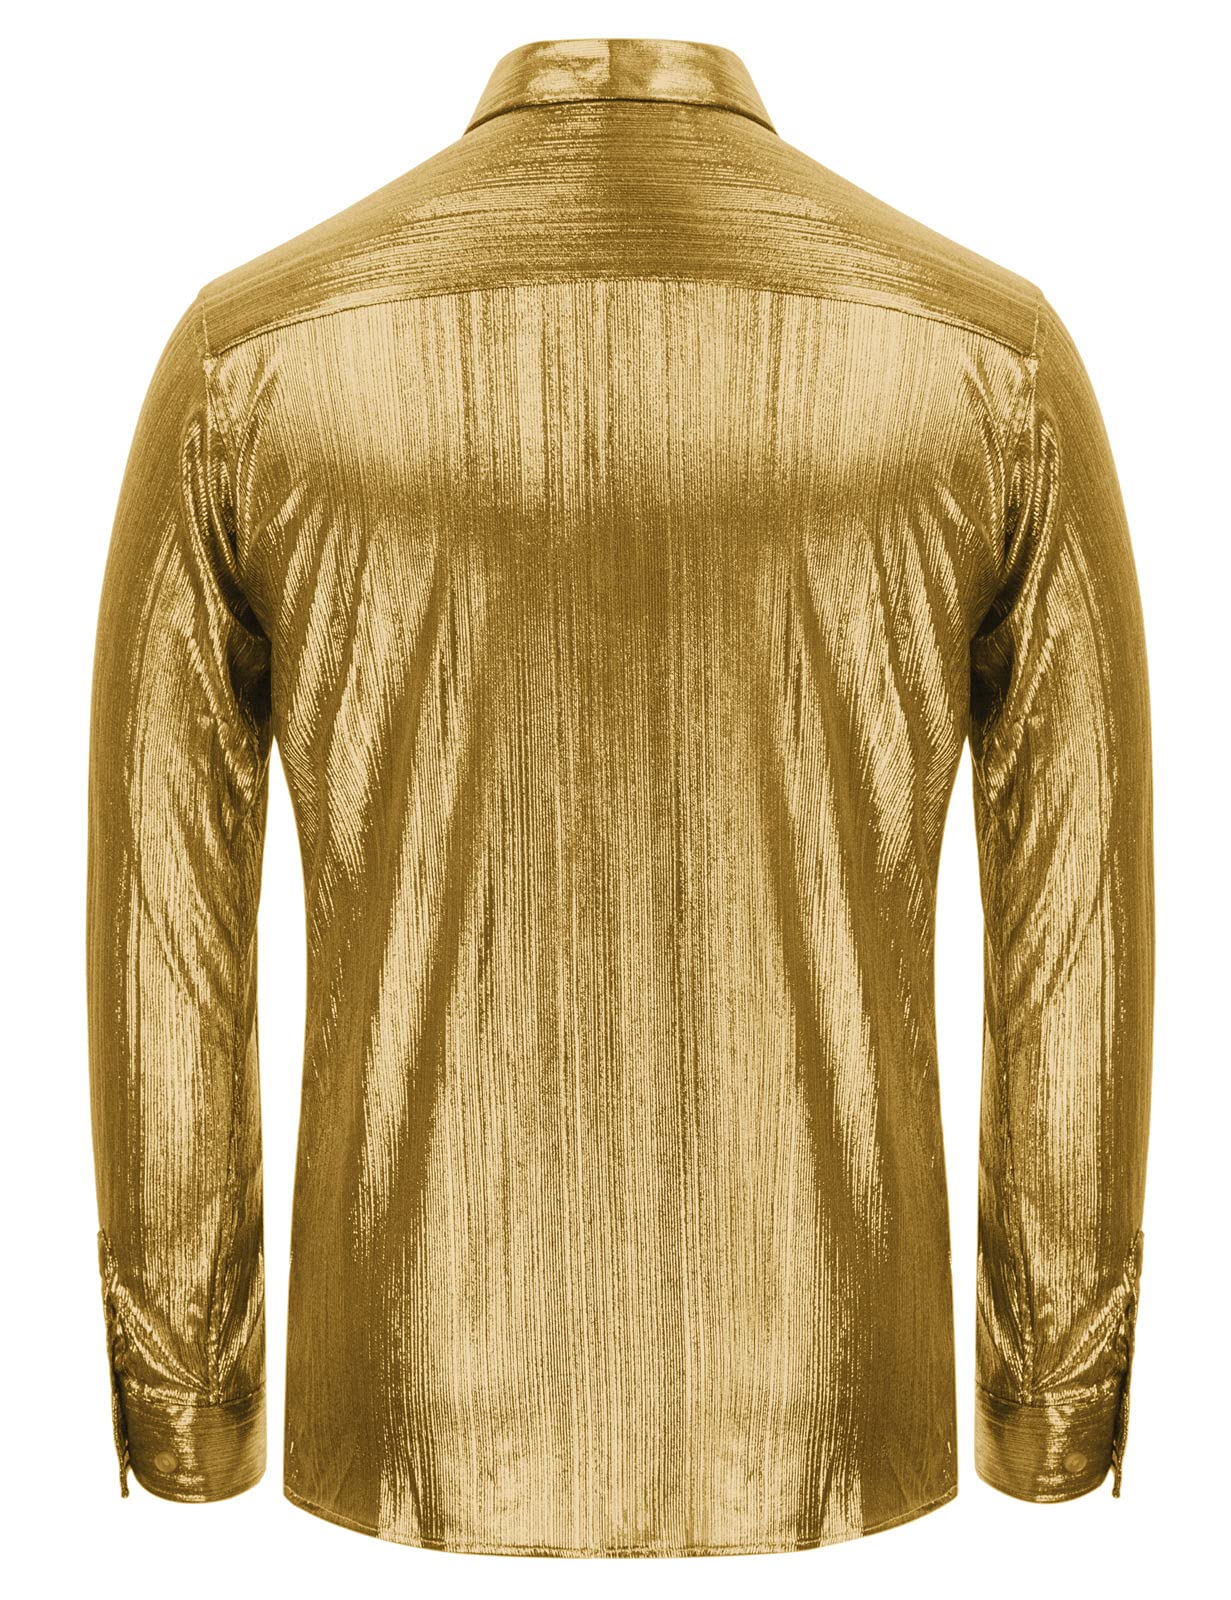 PJ PAUL JONES Mens Metallic Dress Shirts Long Sleeve Button Down 70s Disco Shirt Party Costume